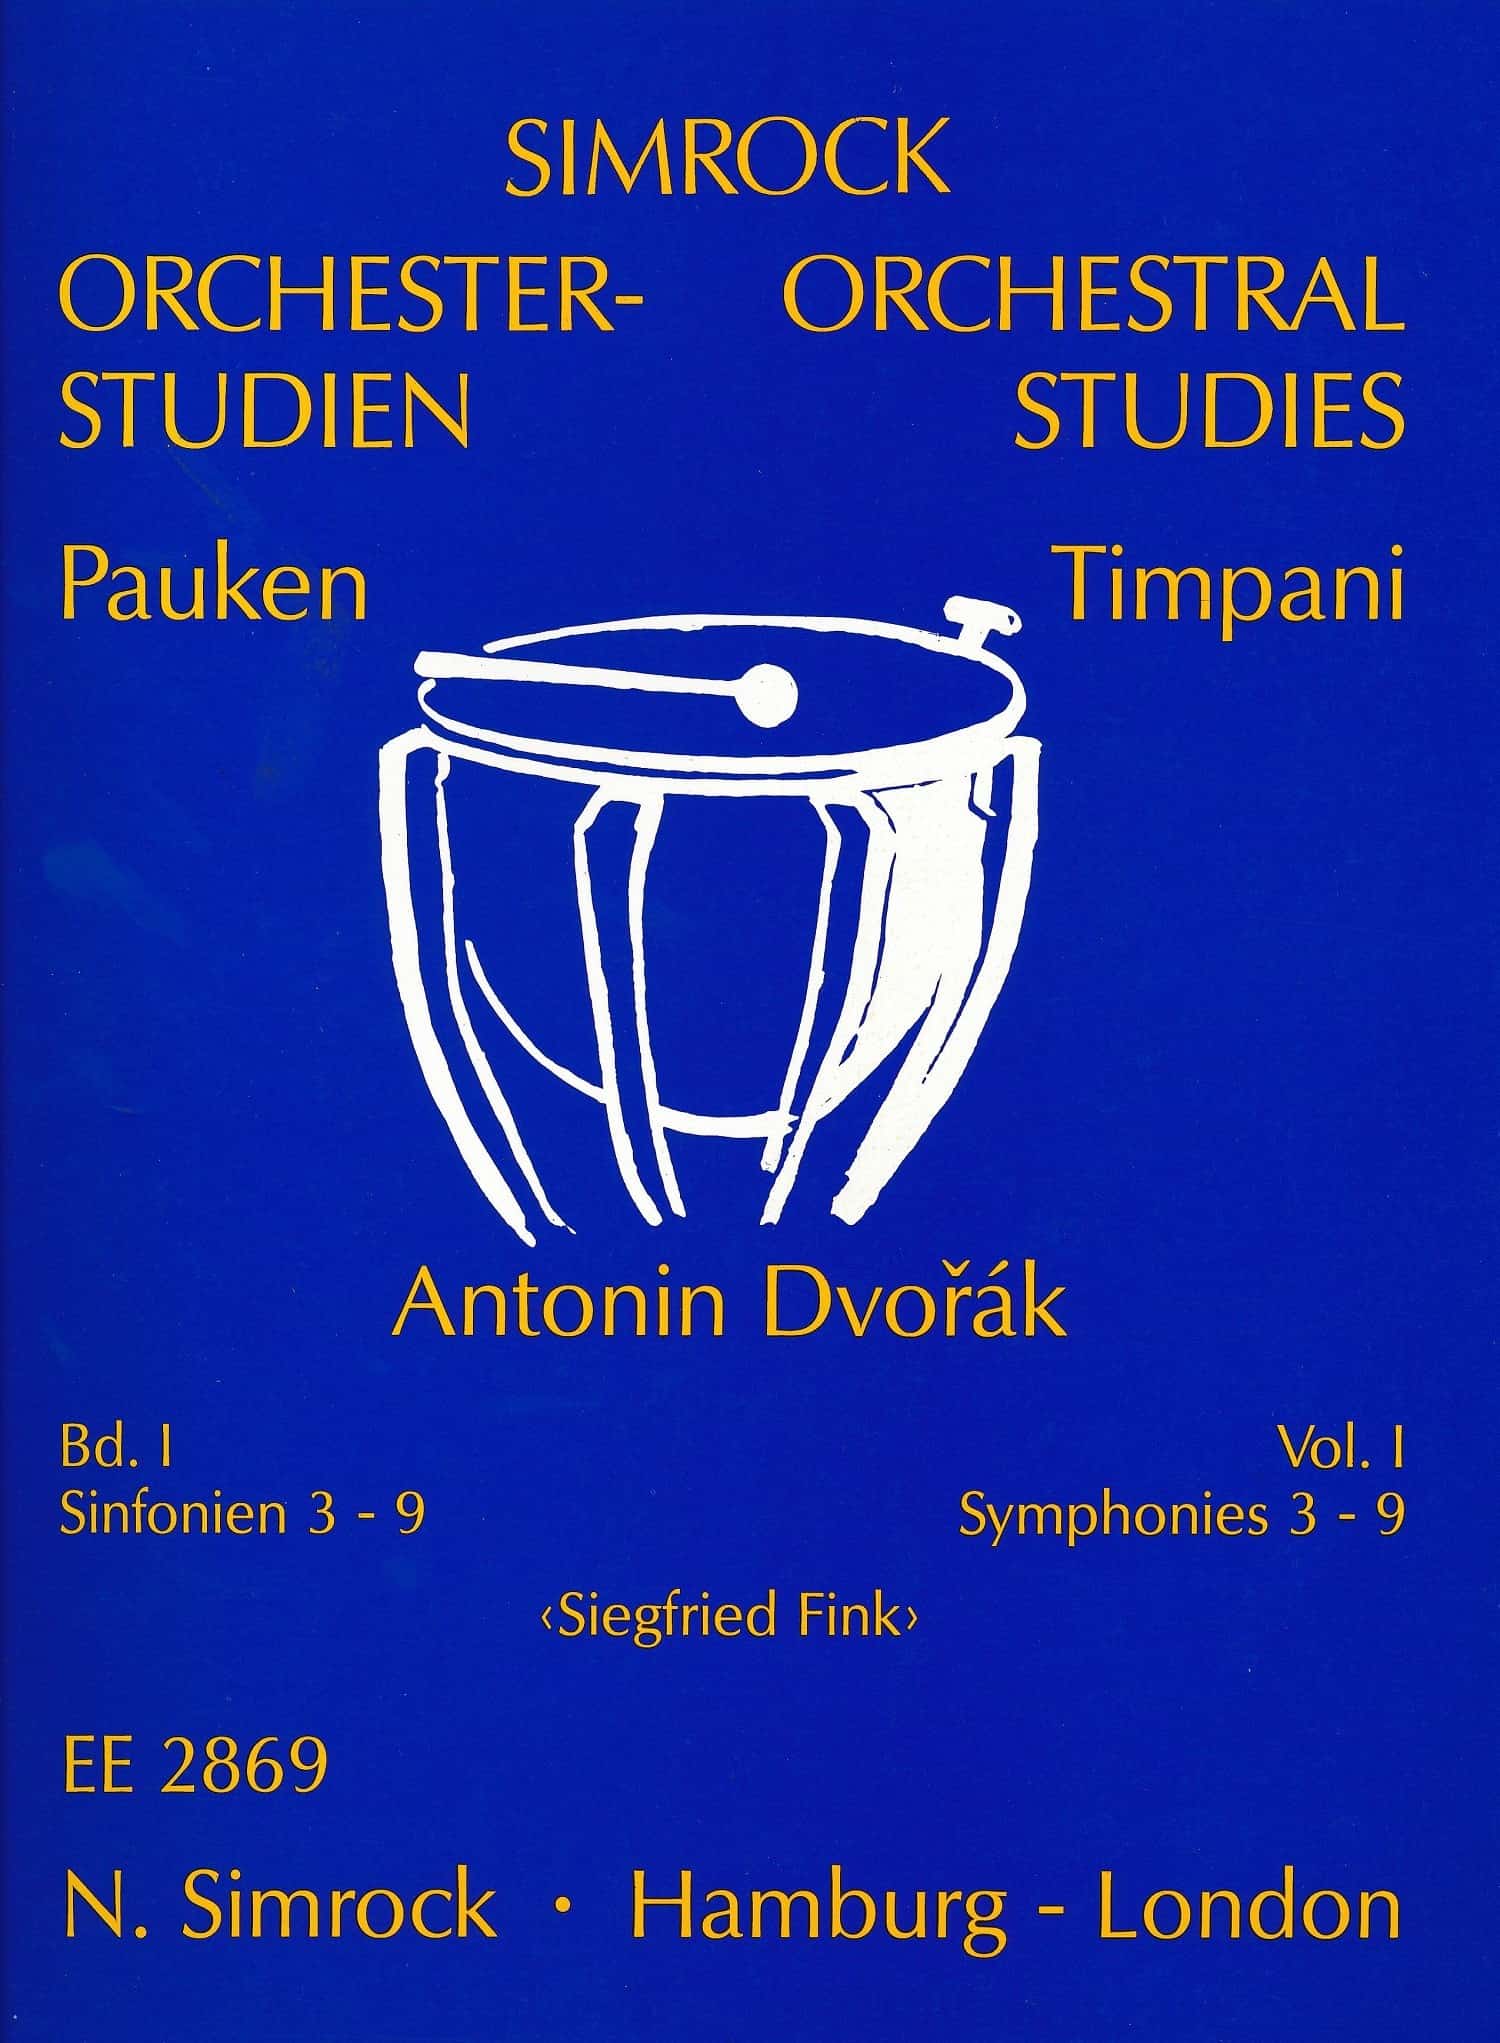 Orchestral Studies - Timpani Vol. 1 Symphonies 3 - 9